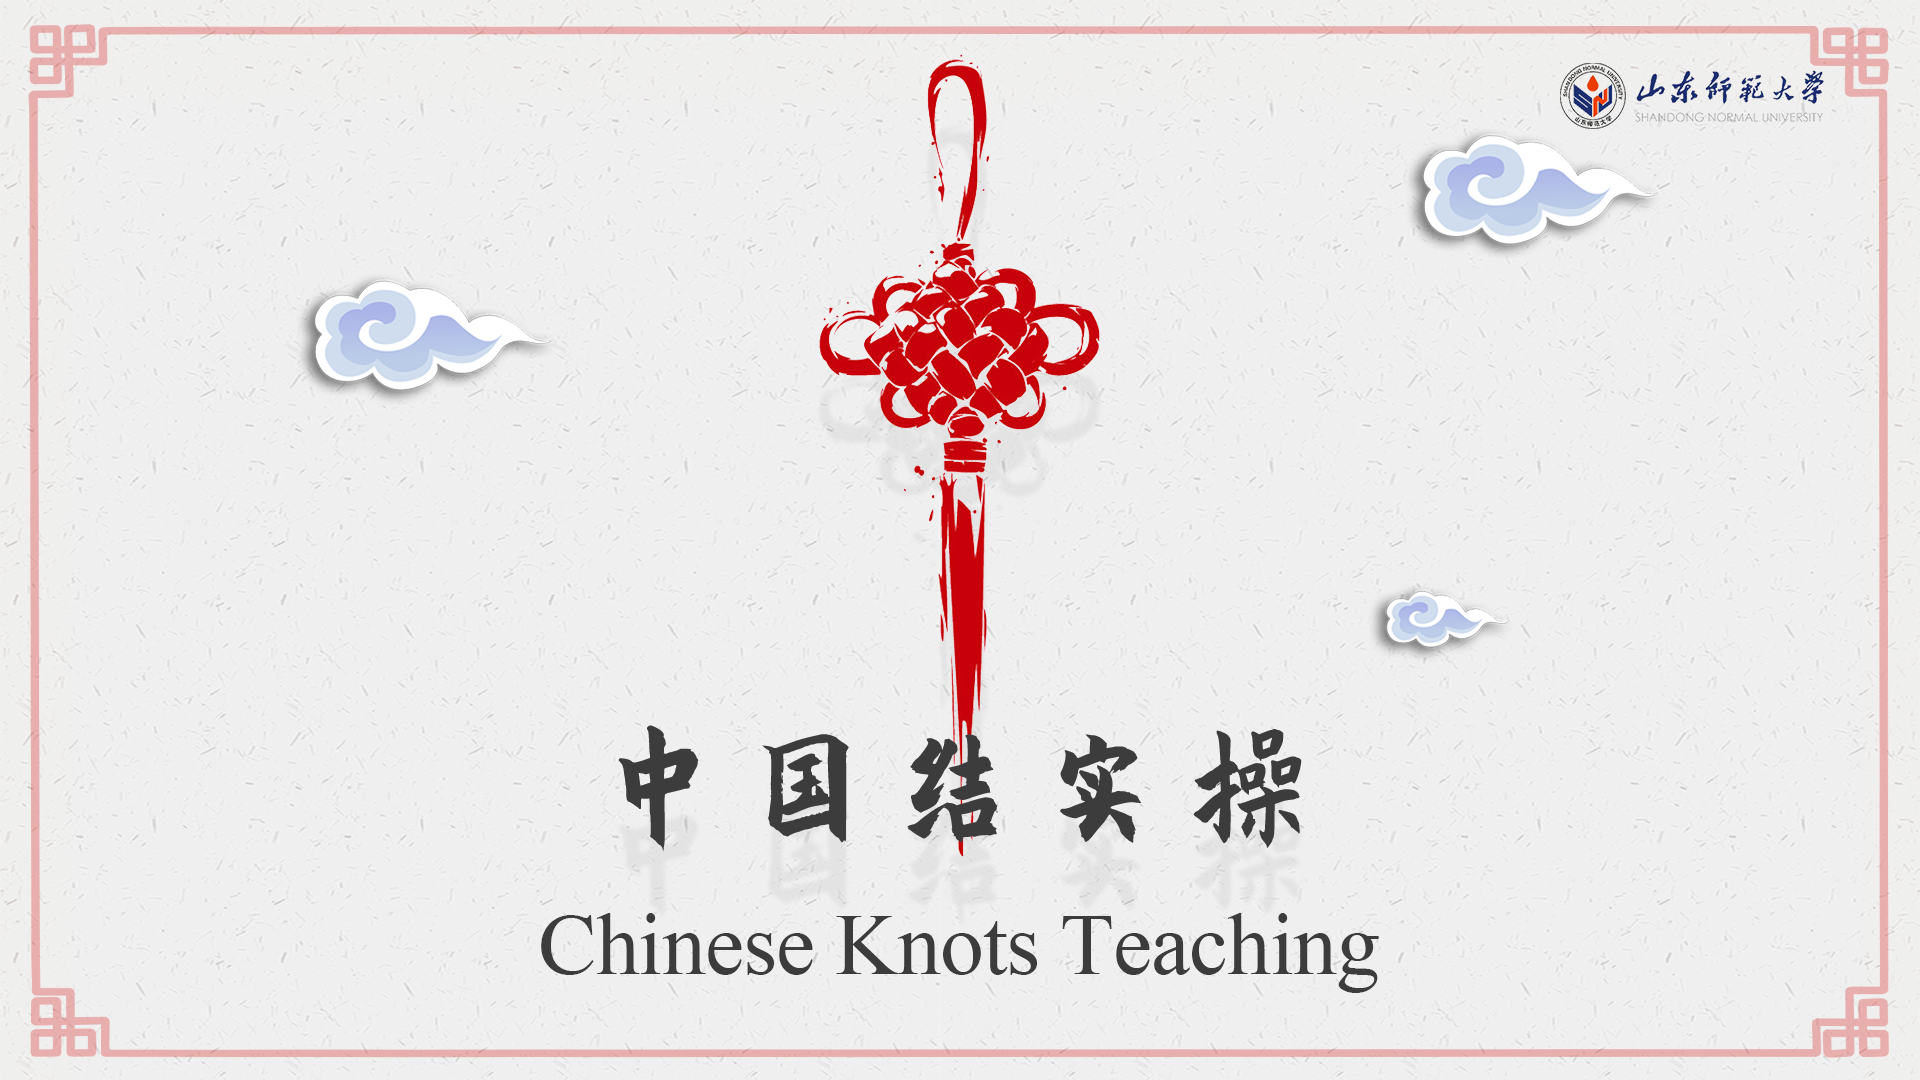 Chinese Knots Teaching